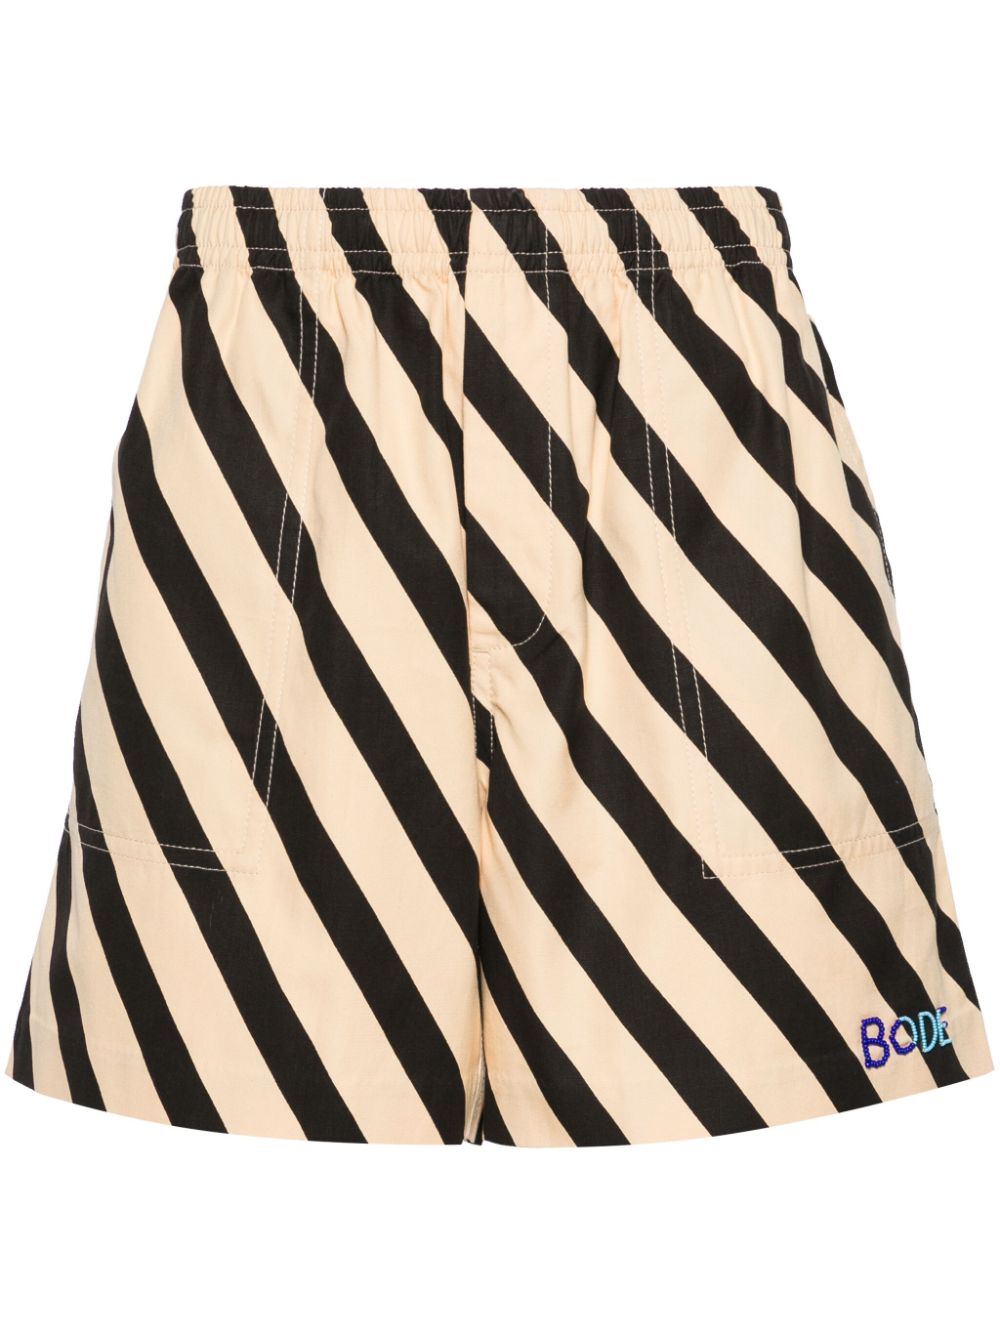 BODE Domino striped bermuda shorts - Neutrals